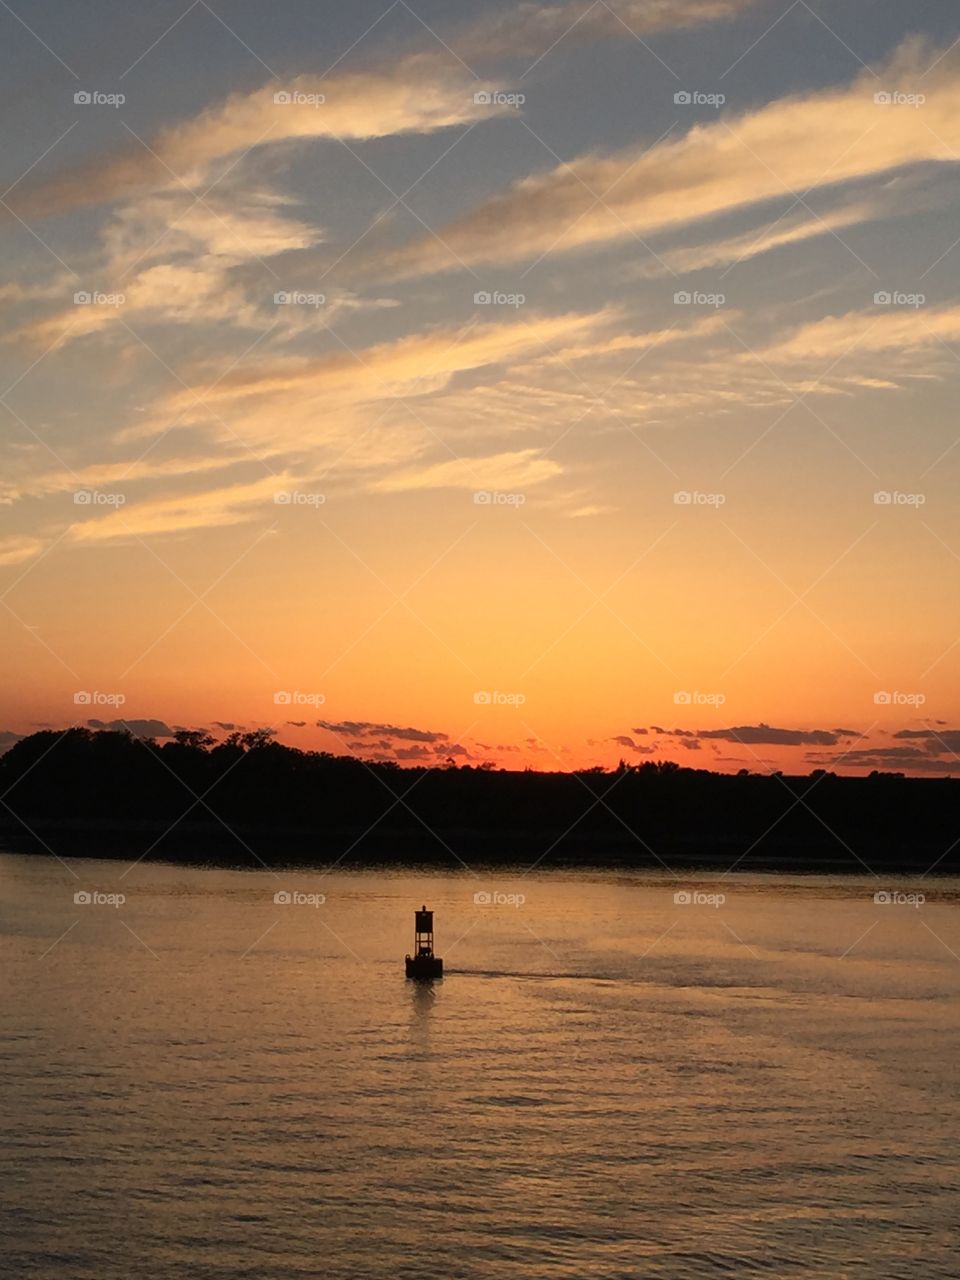 Sunset on the Savannah River